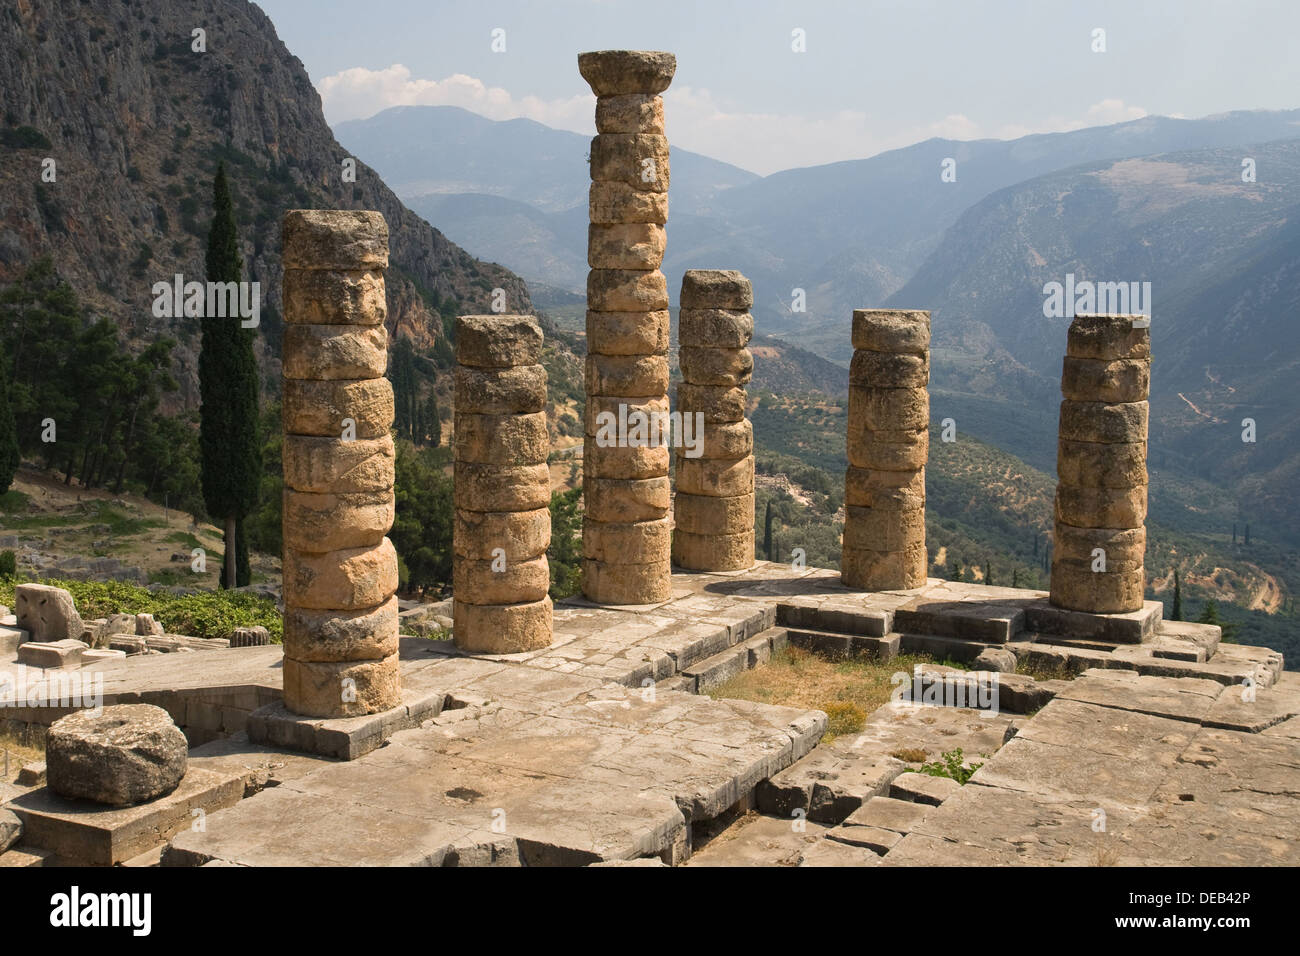 Columns of the Temple of Apollo at Delphi, Greece. Stock Photo